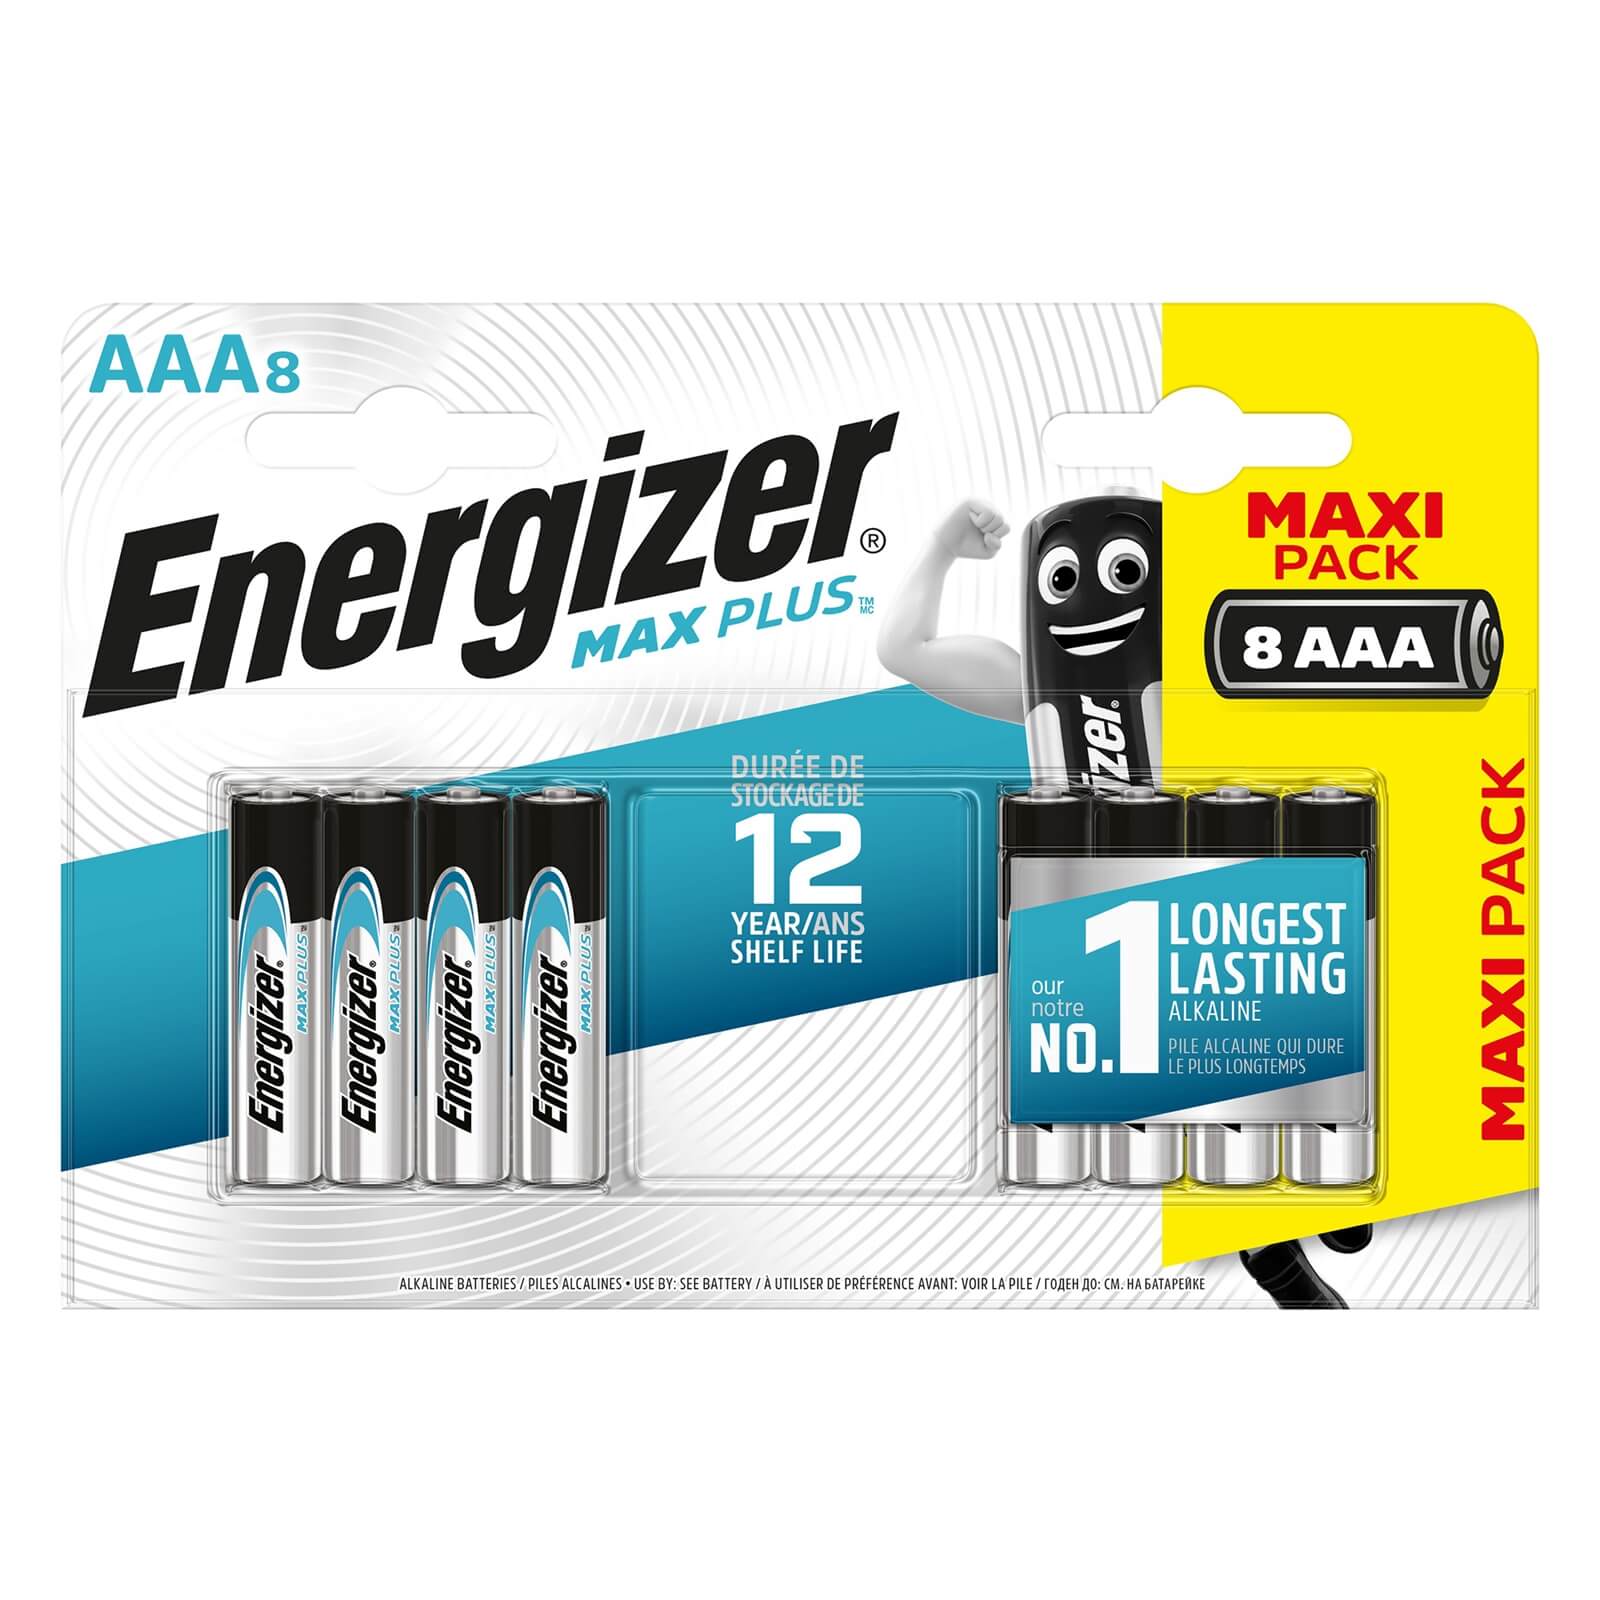 Energizer MAX PLUS Alkaline AAA Batteries - 8 Pack